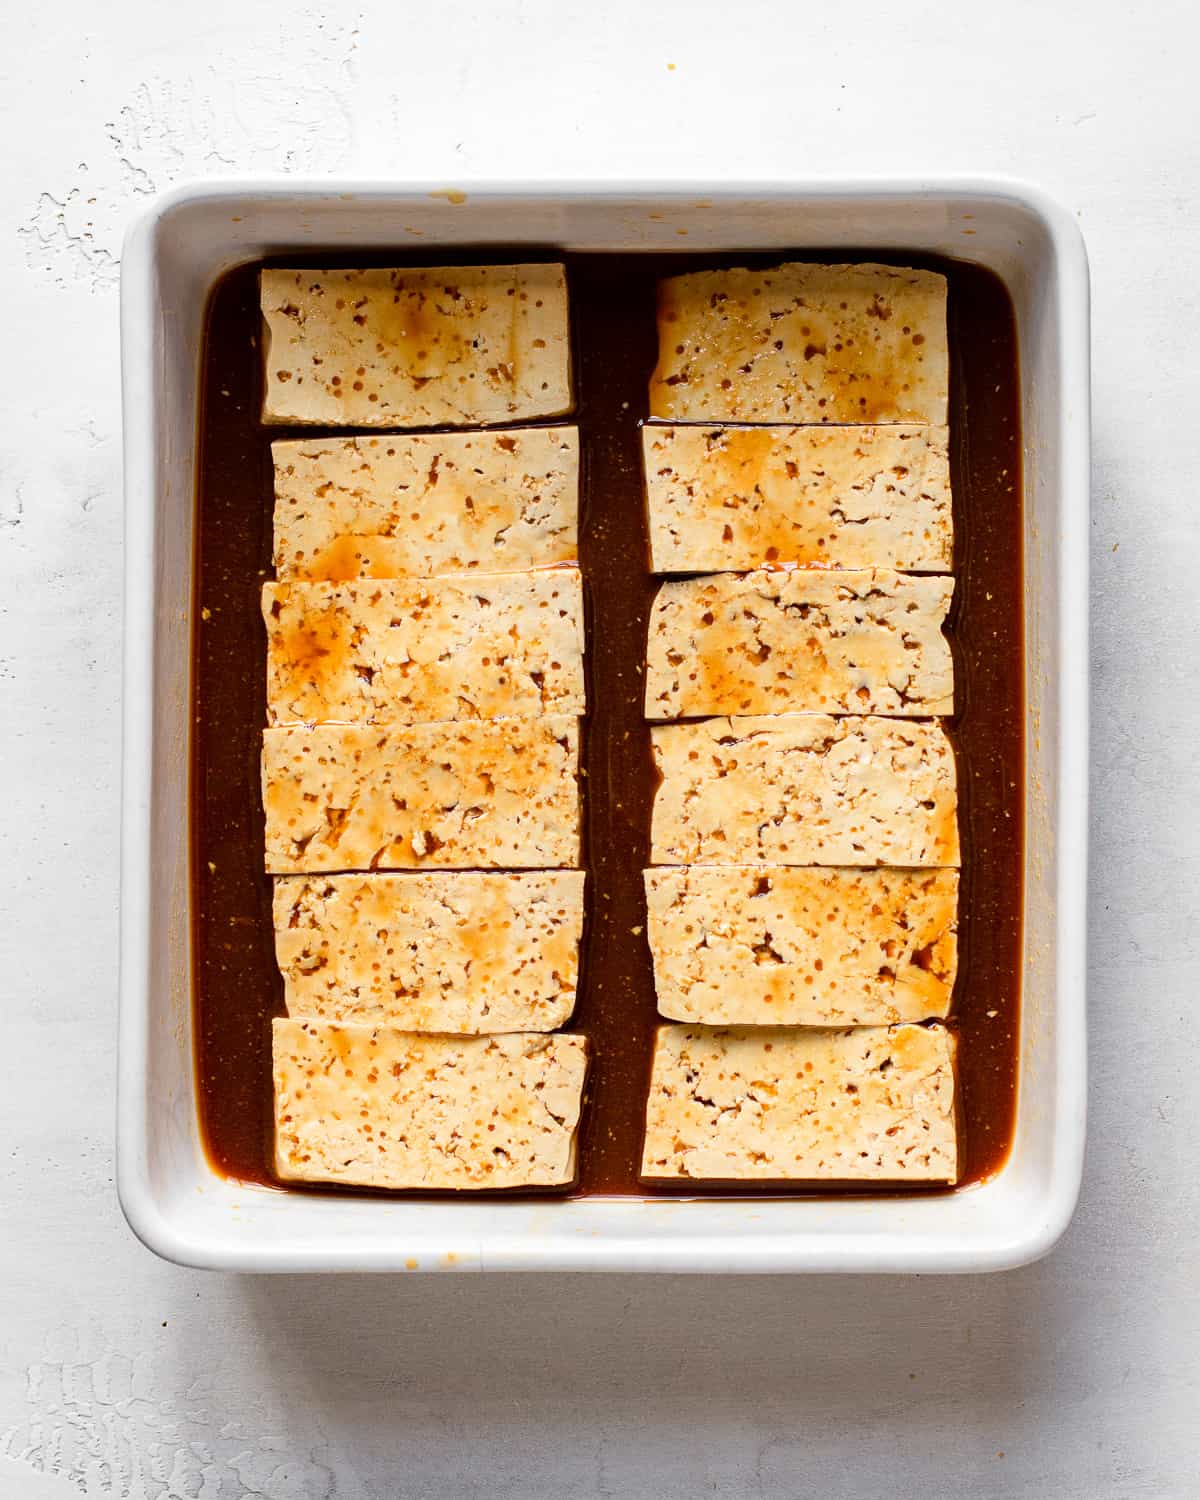 Twelve tofu planks marinating in a rectangular baking dish.